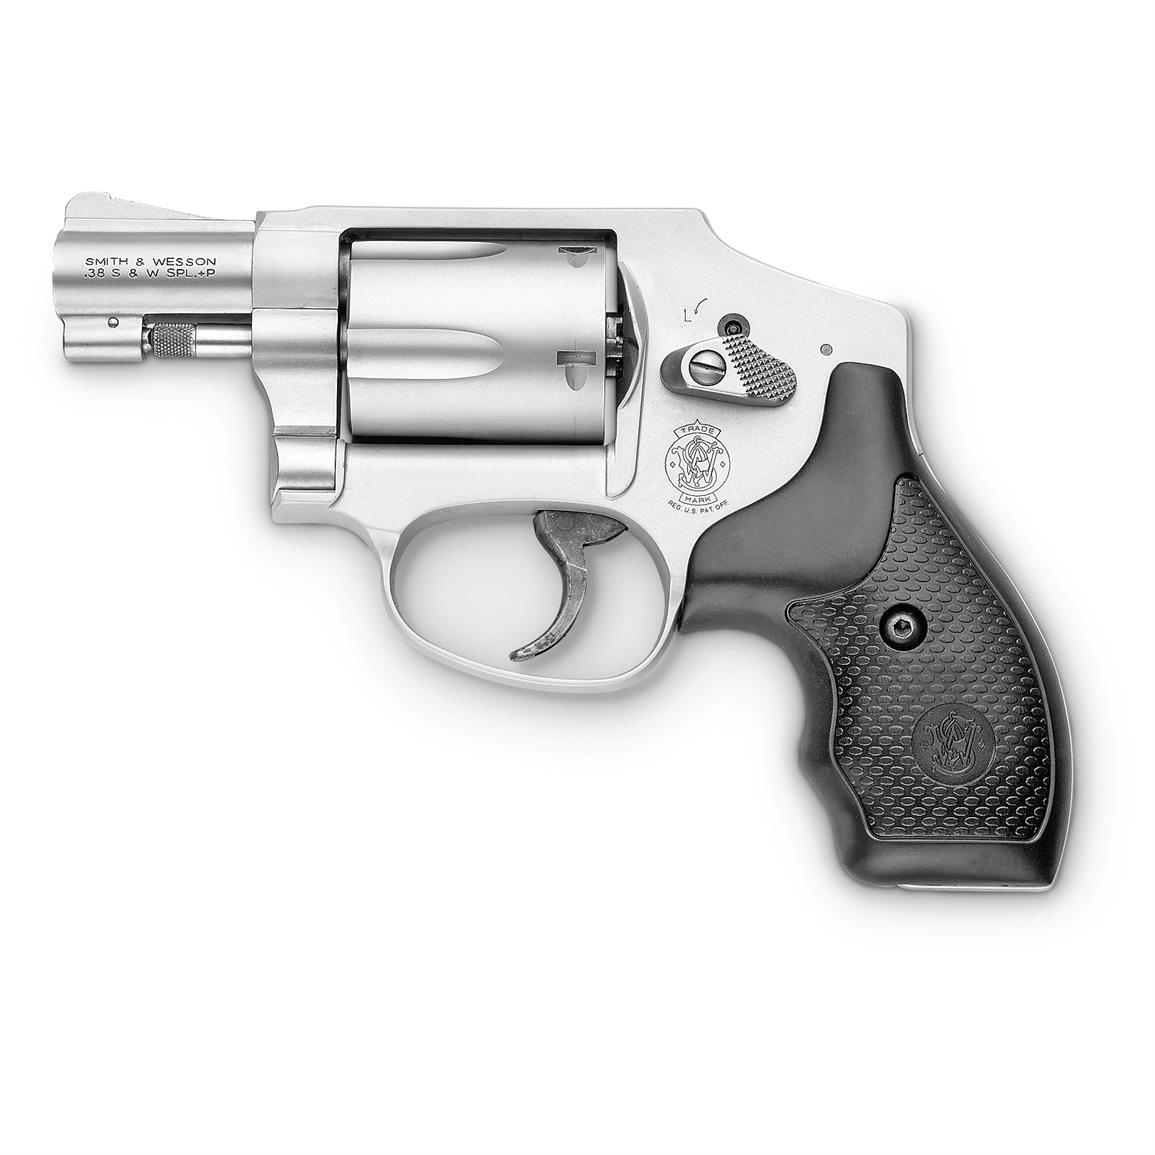 Smith & Wesson Model 642, Revolver, .38 Special  P, 1.875" Barrel, 5 Rounds